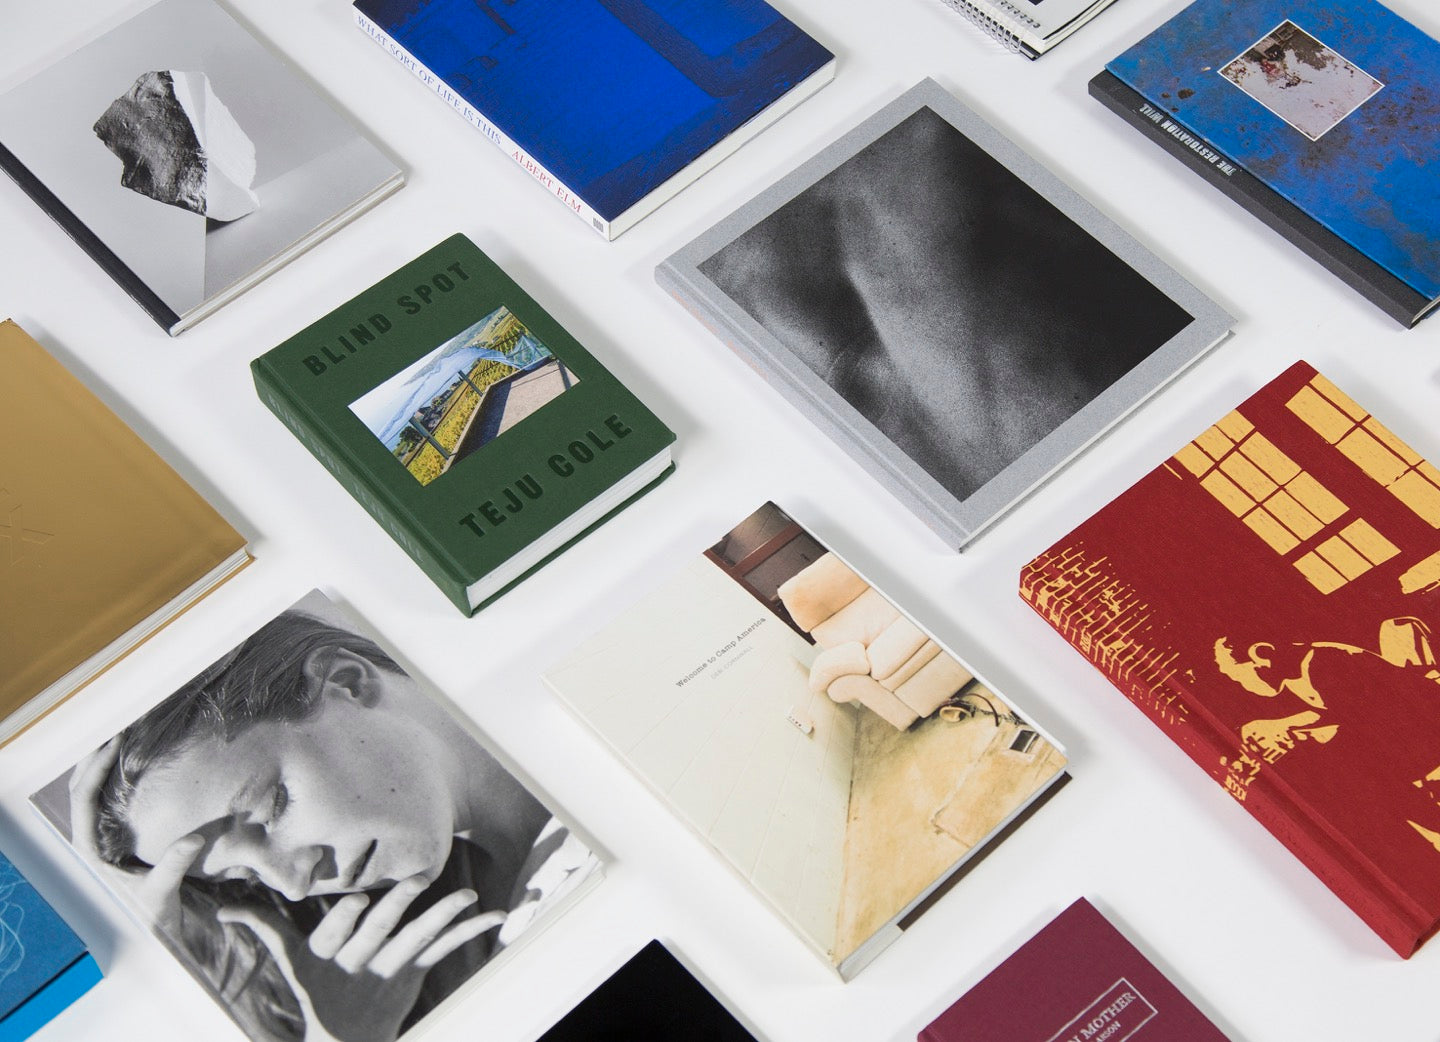 DAP /Artbook- The largest distributor for Artist Imprints